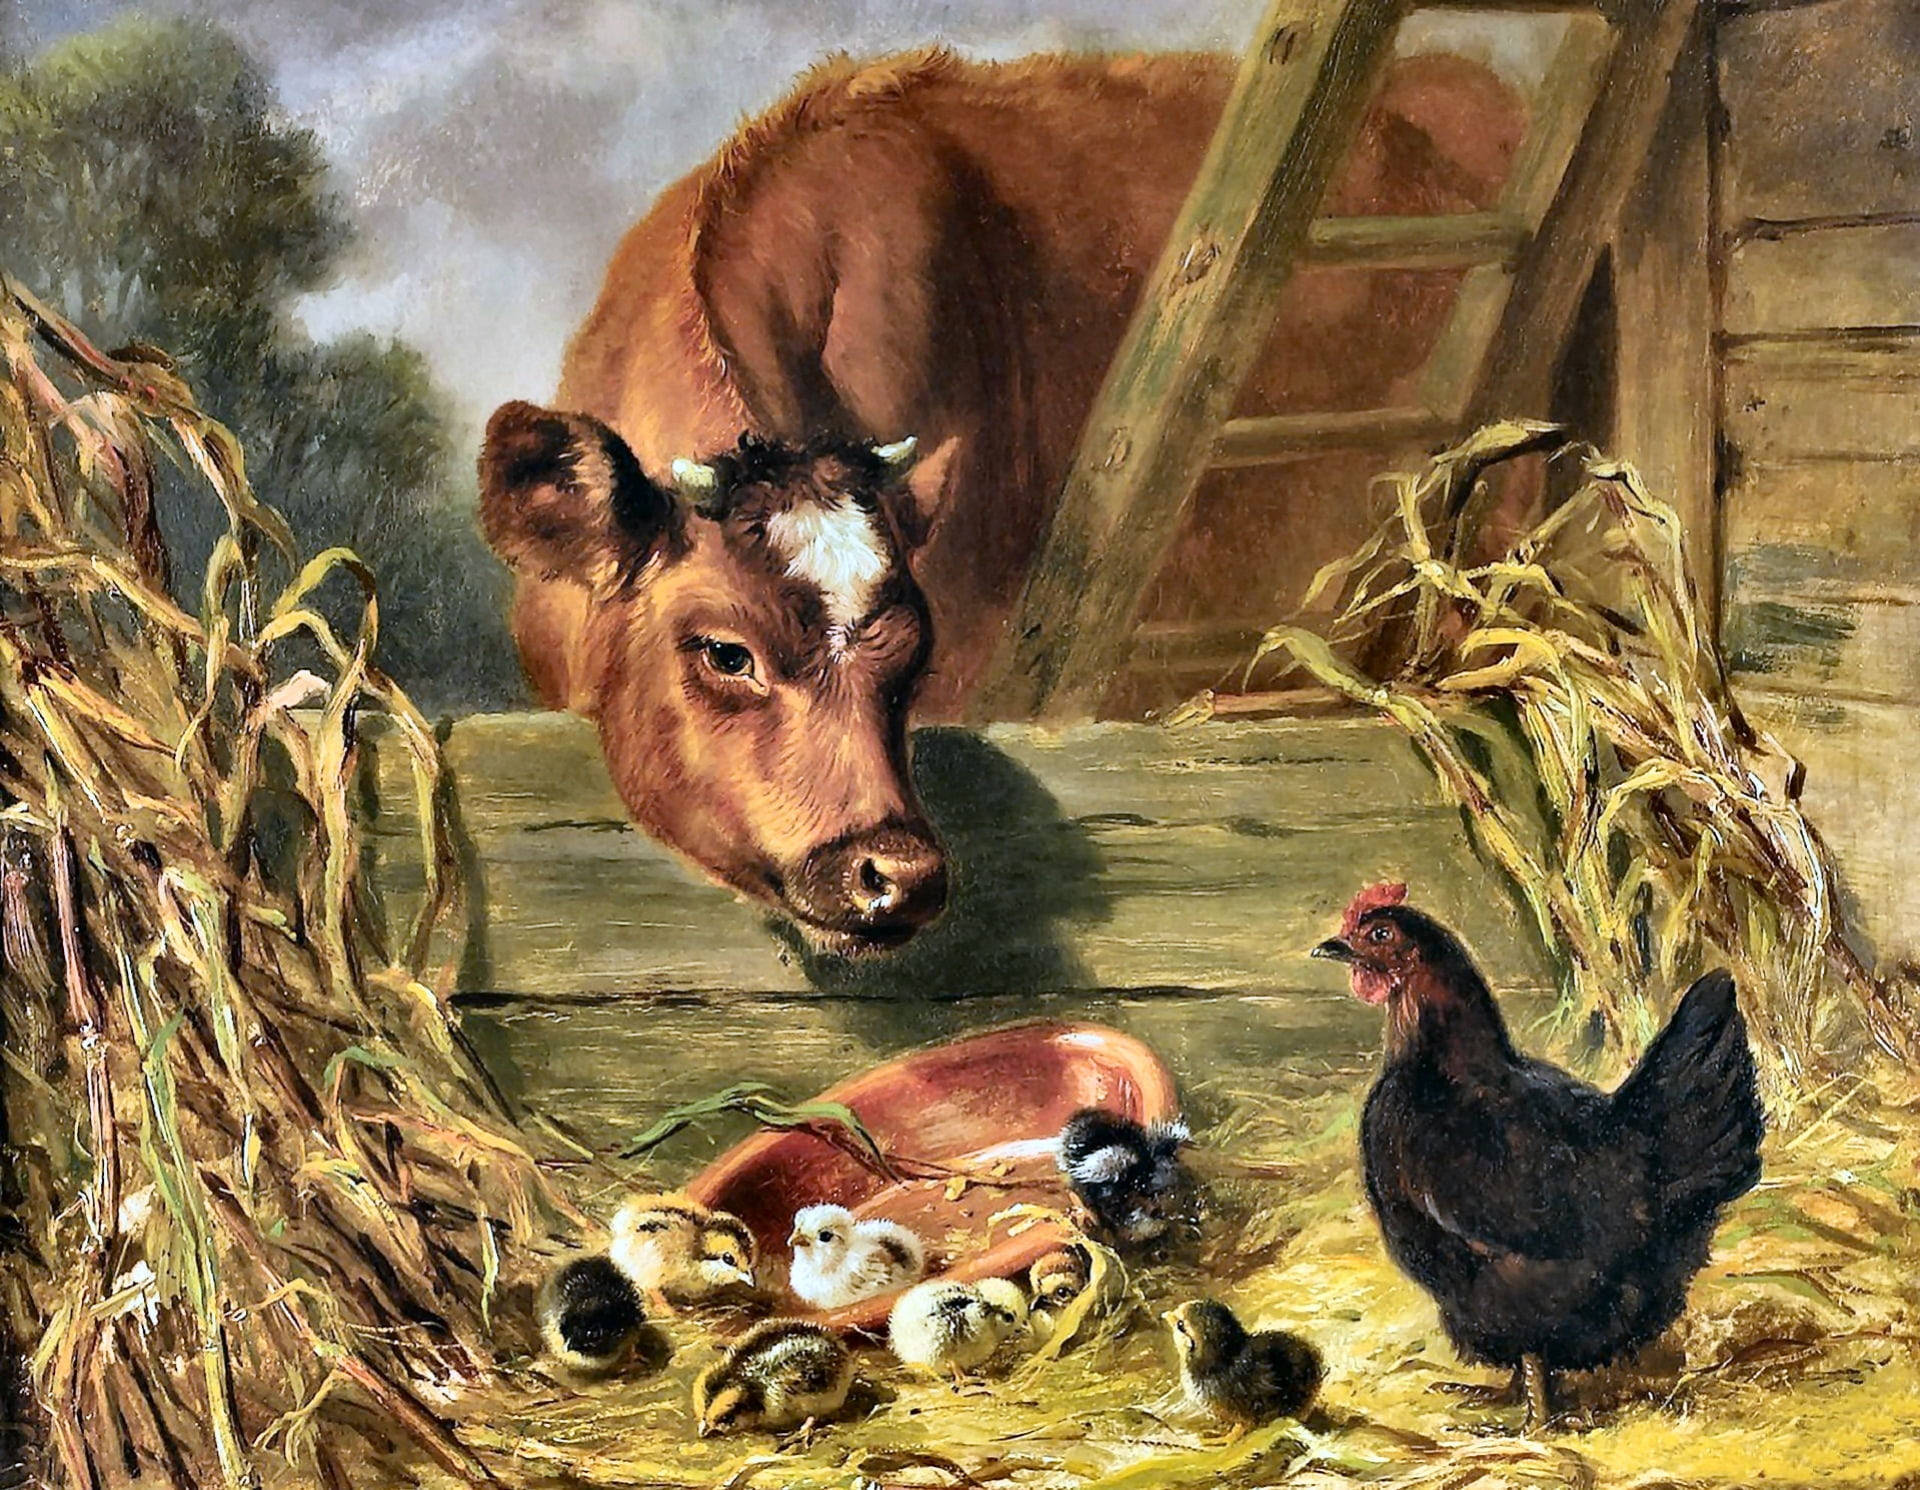 Fun Art Of A Farm Animal Family Wallpaper